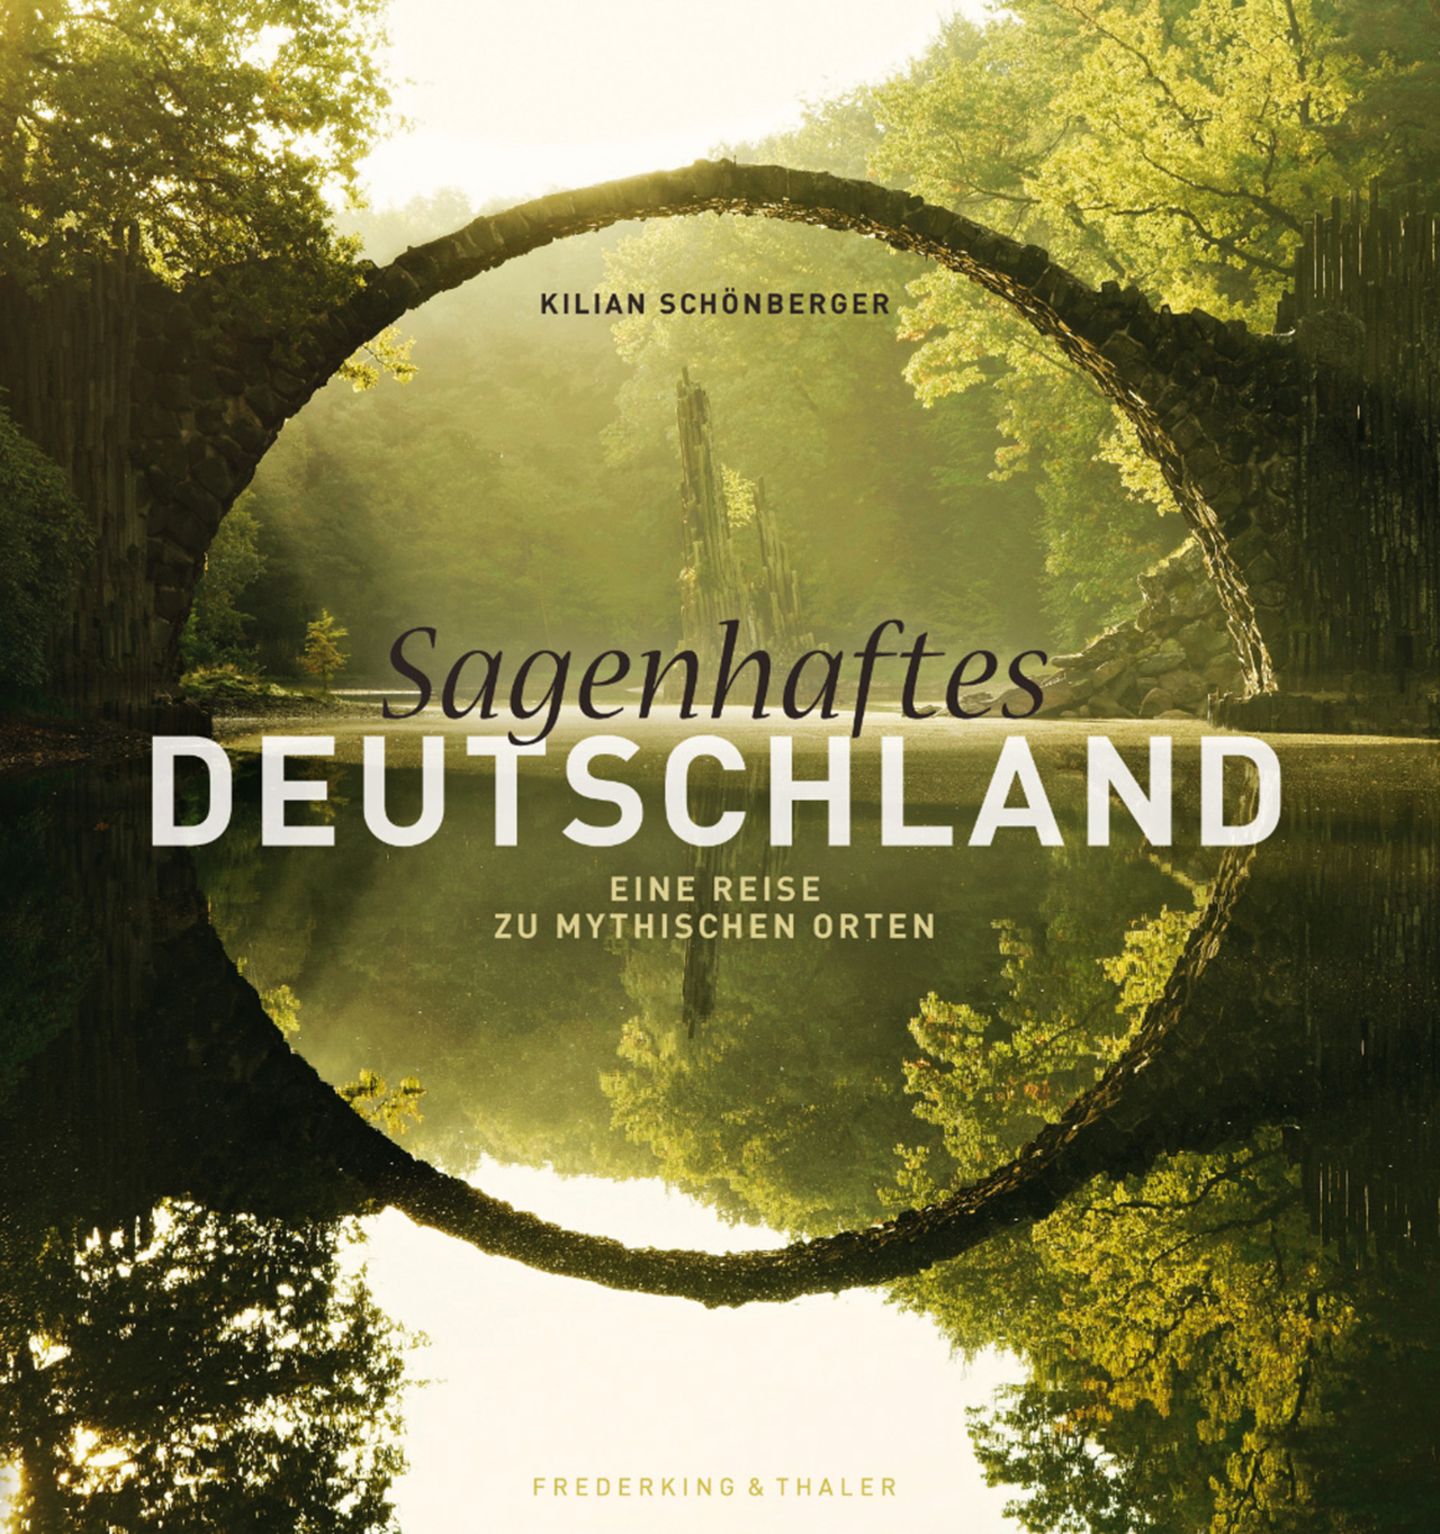 Kilian Schönberger/Frederking & Thaler Verlag